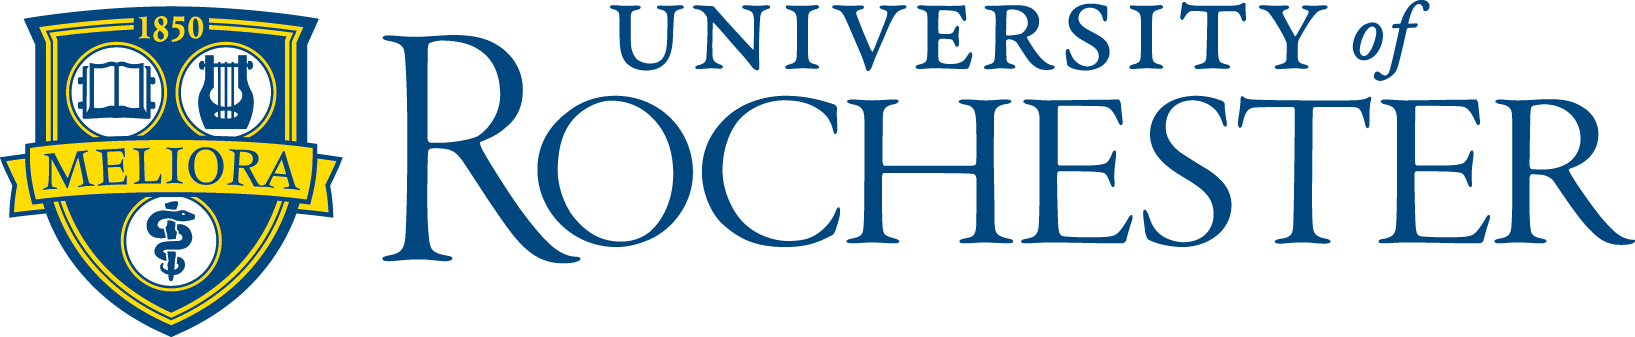 U of R Logo - Symbols :: About Us :: University of Rochester